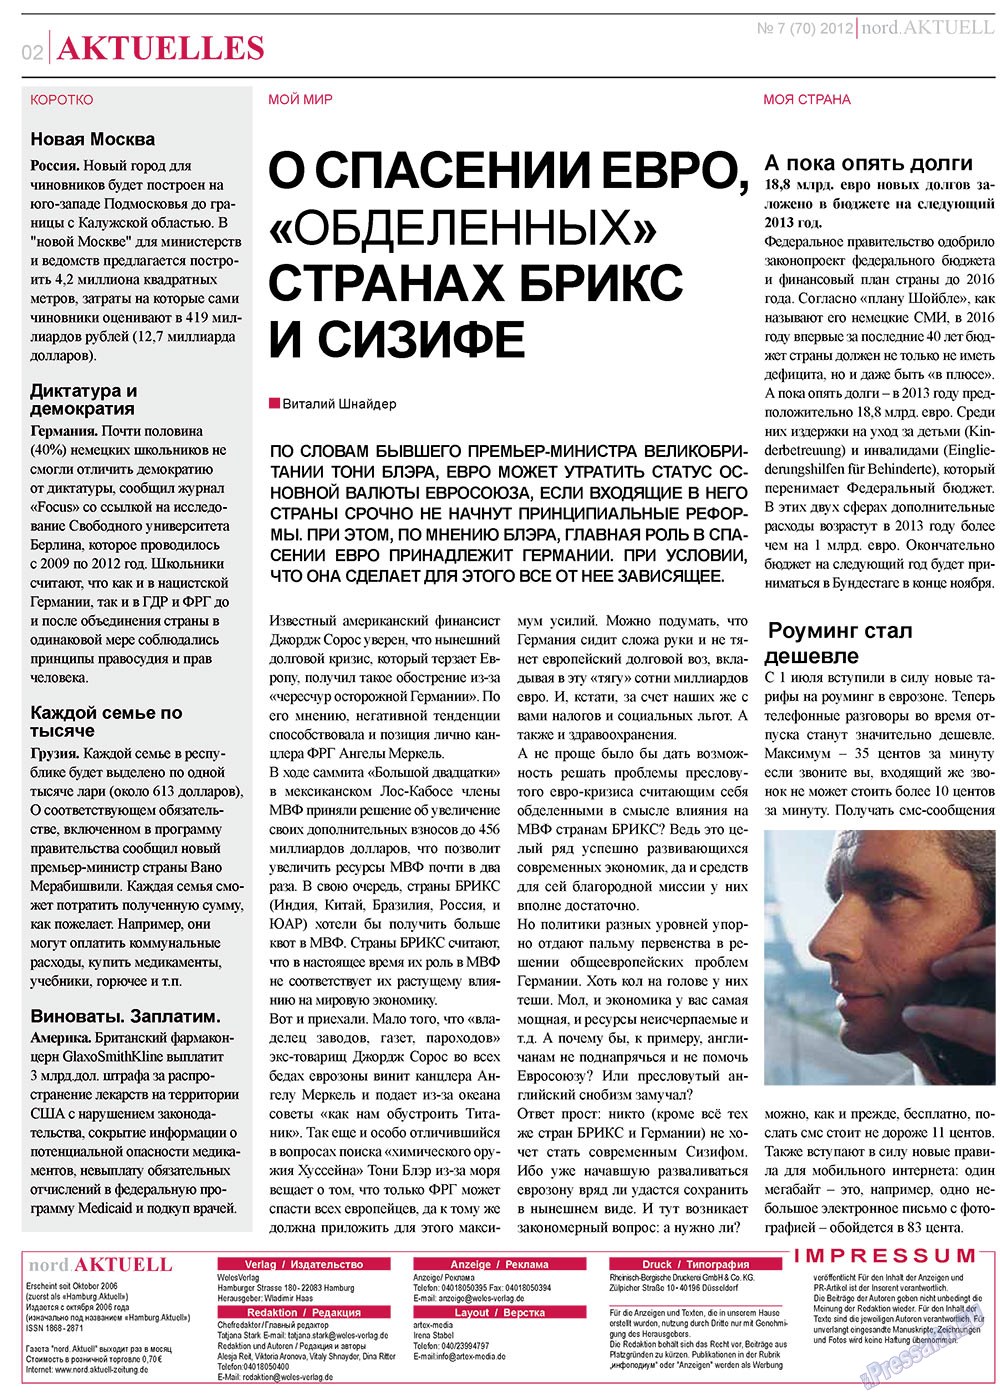 nord.Aktuell, газета. 2012 №7 стр.2